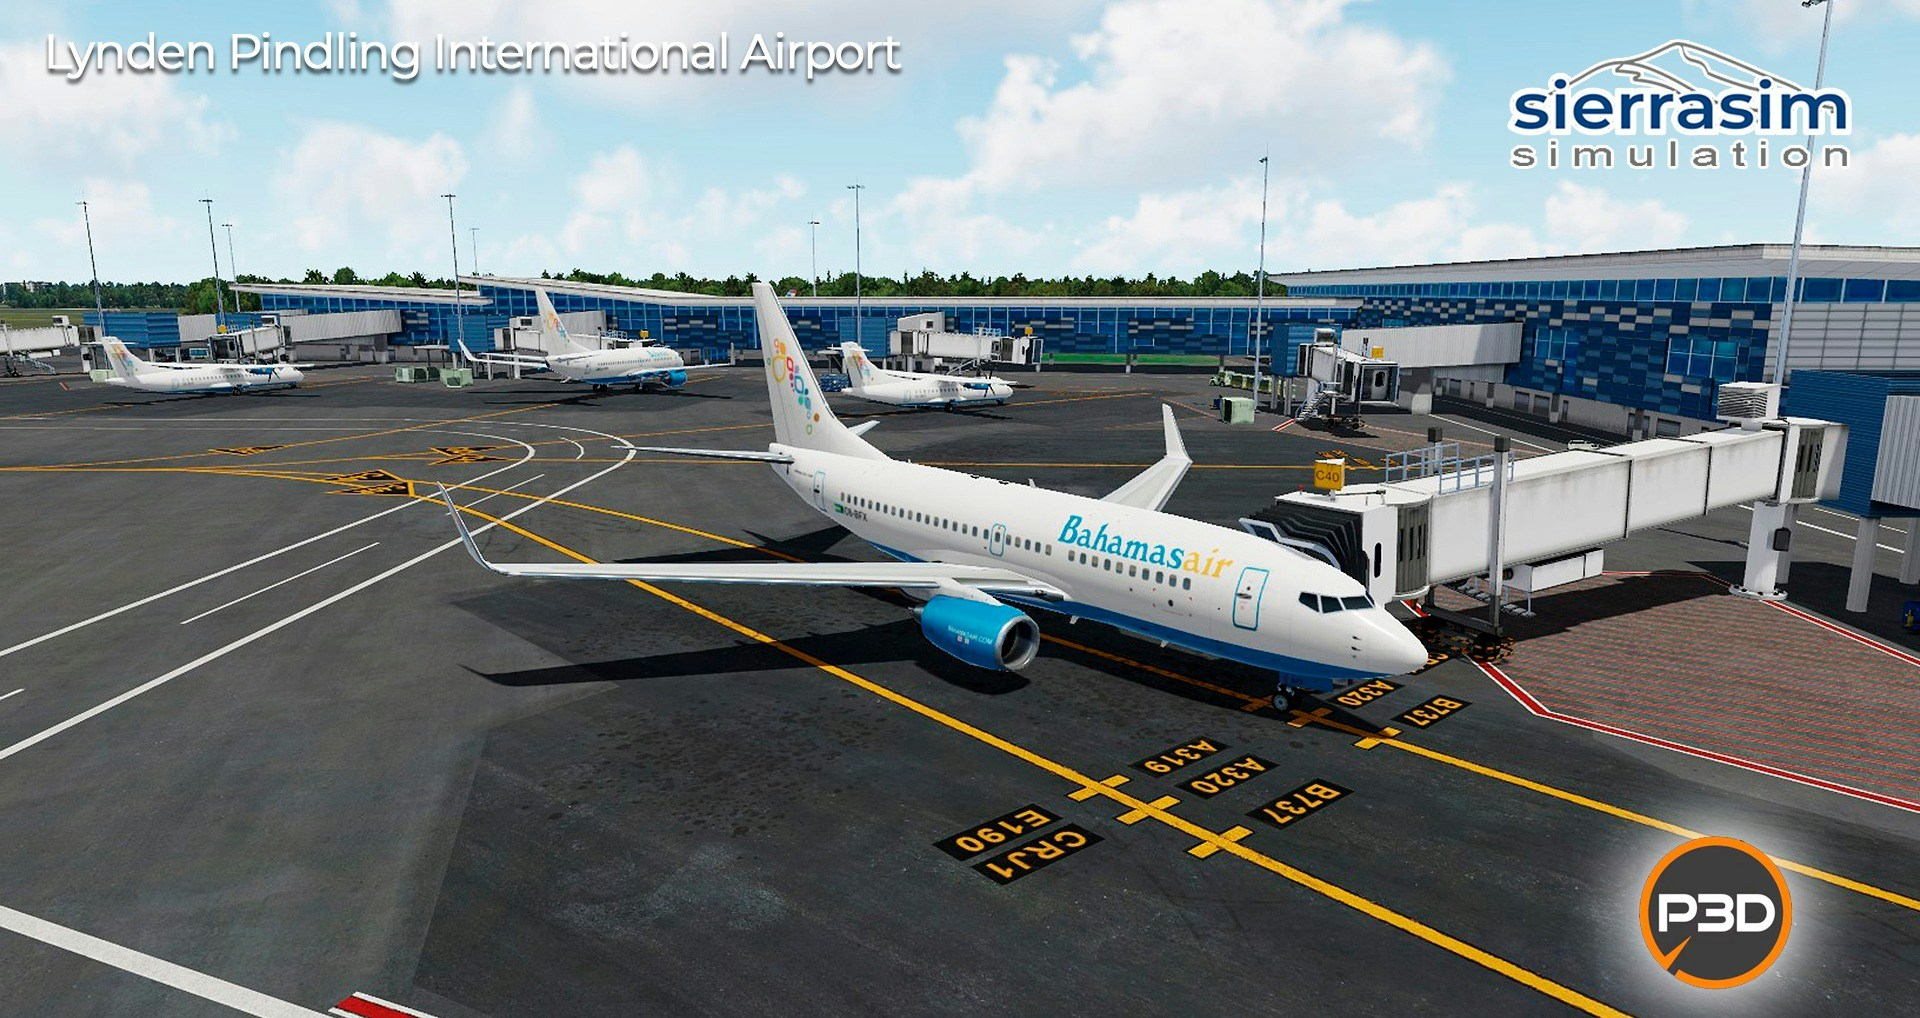 Sierrasim Simulation Releases Lynden Pindling International Airport for P3D